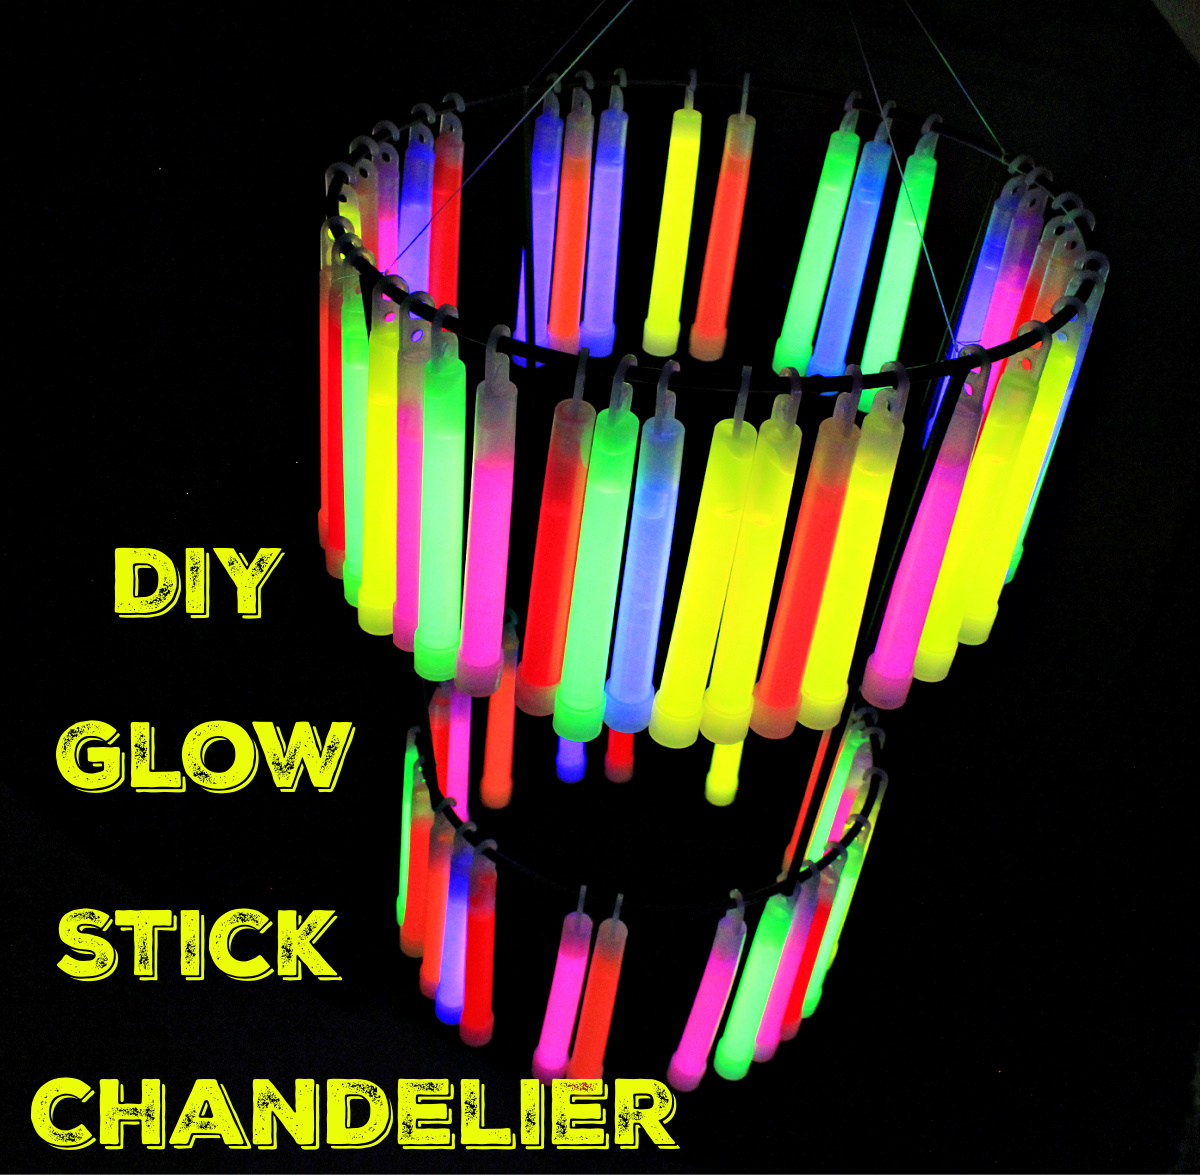 DIY Glow stick chandelier